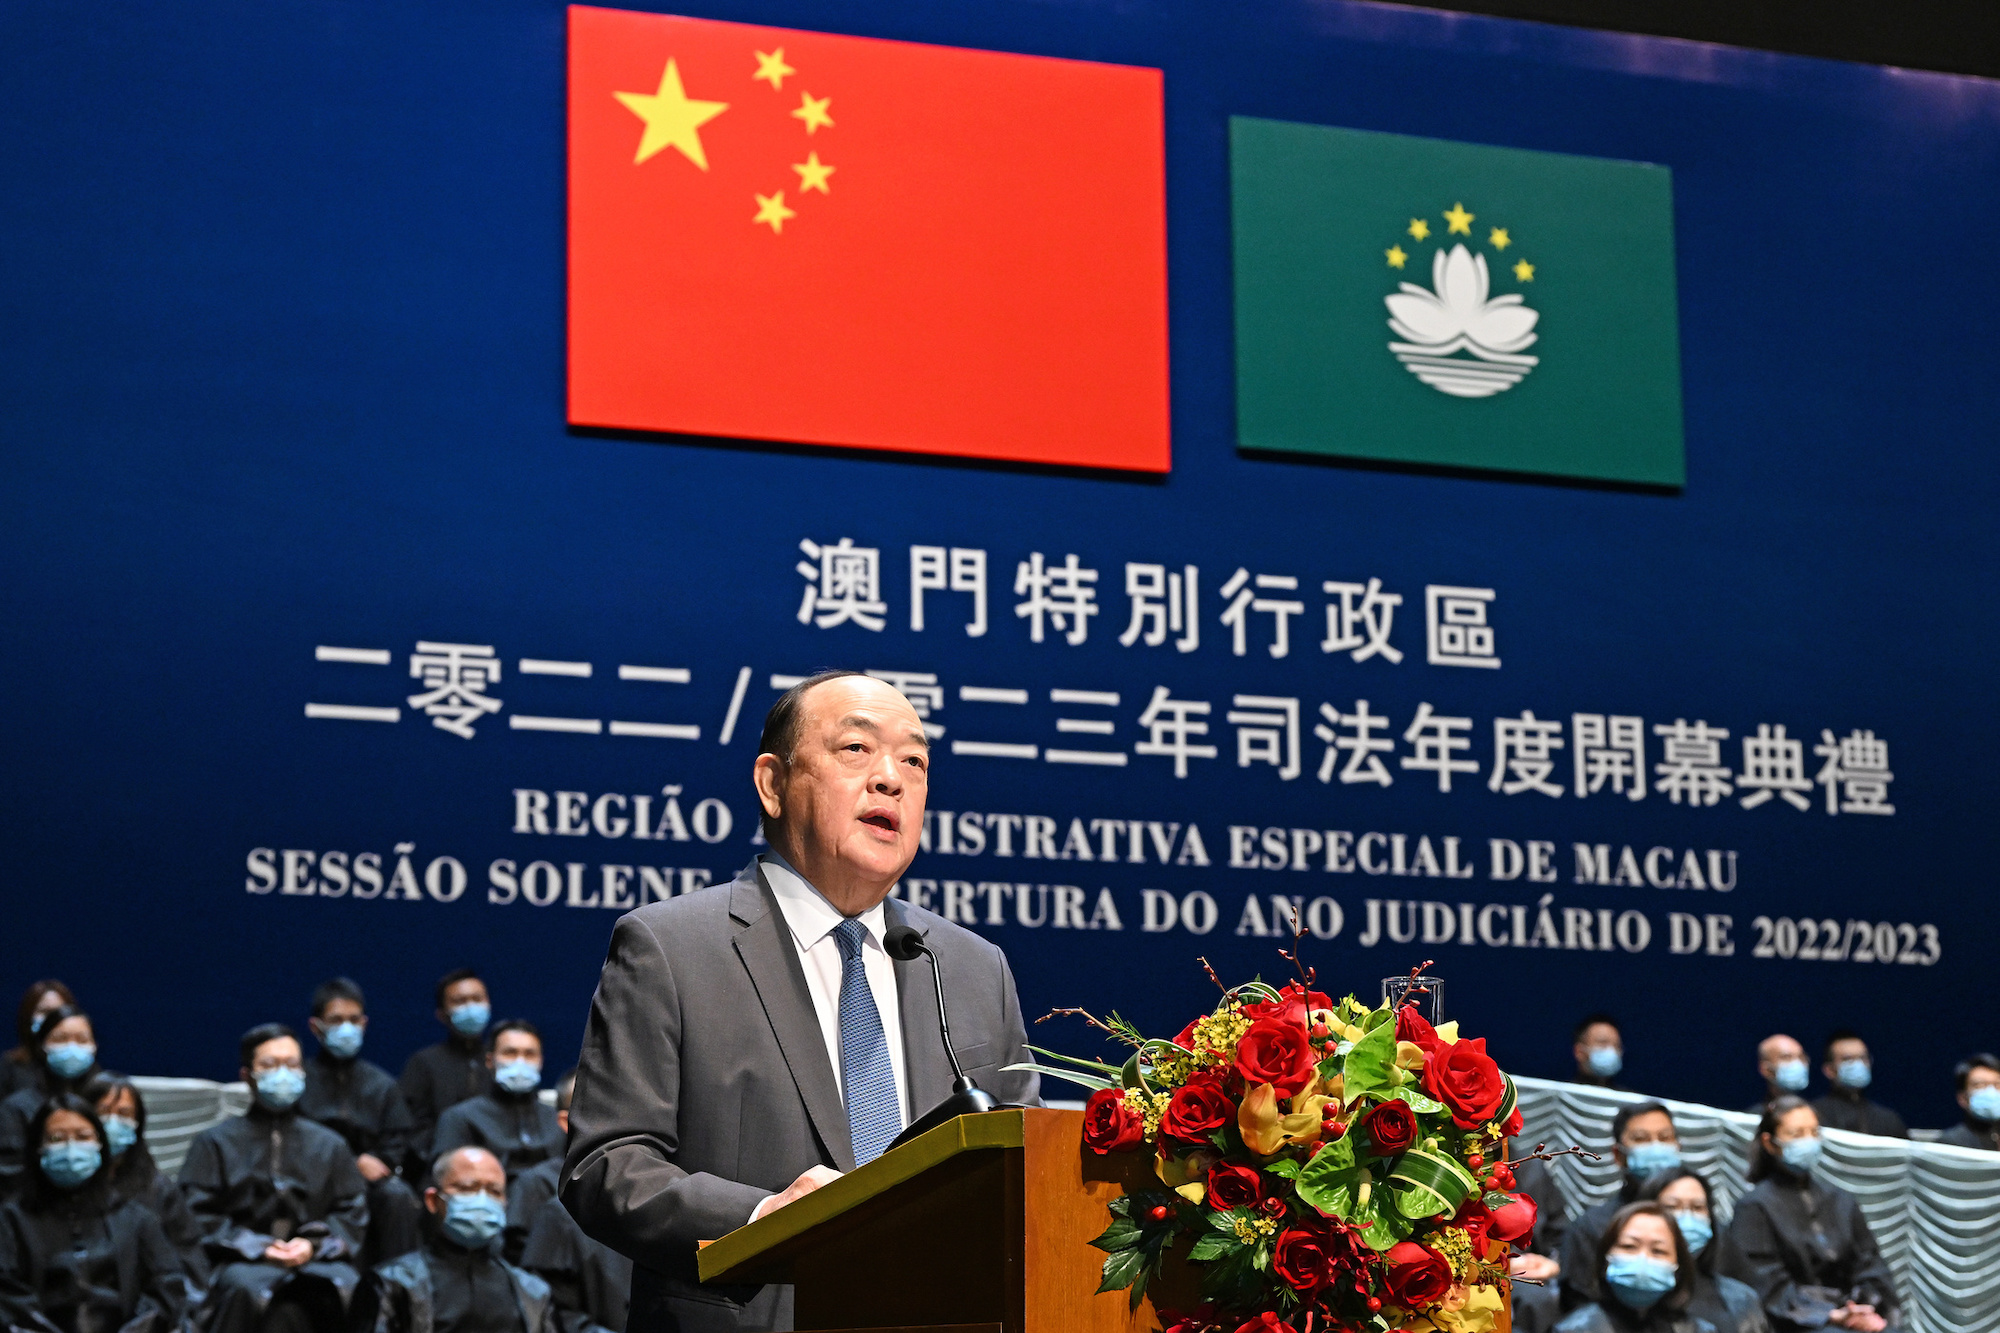 Chief Executive defends Macao Judicial Year